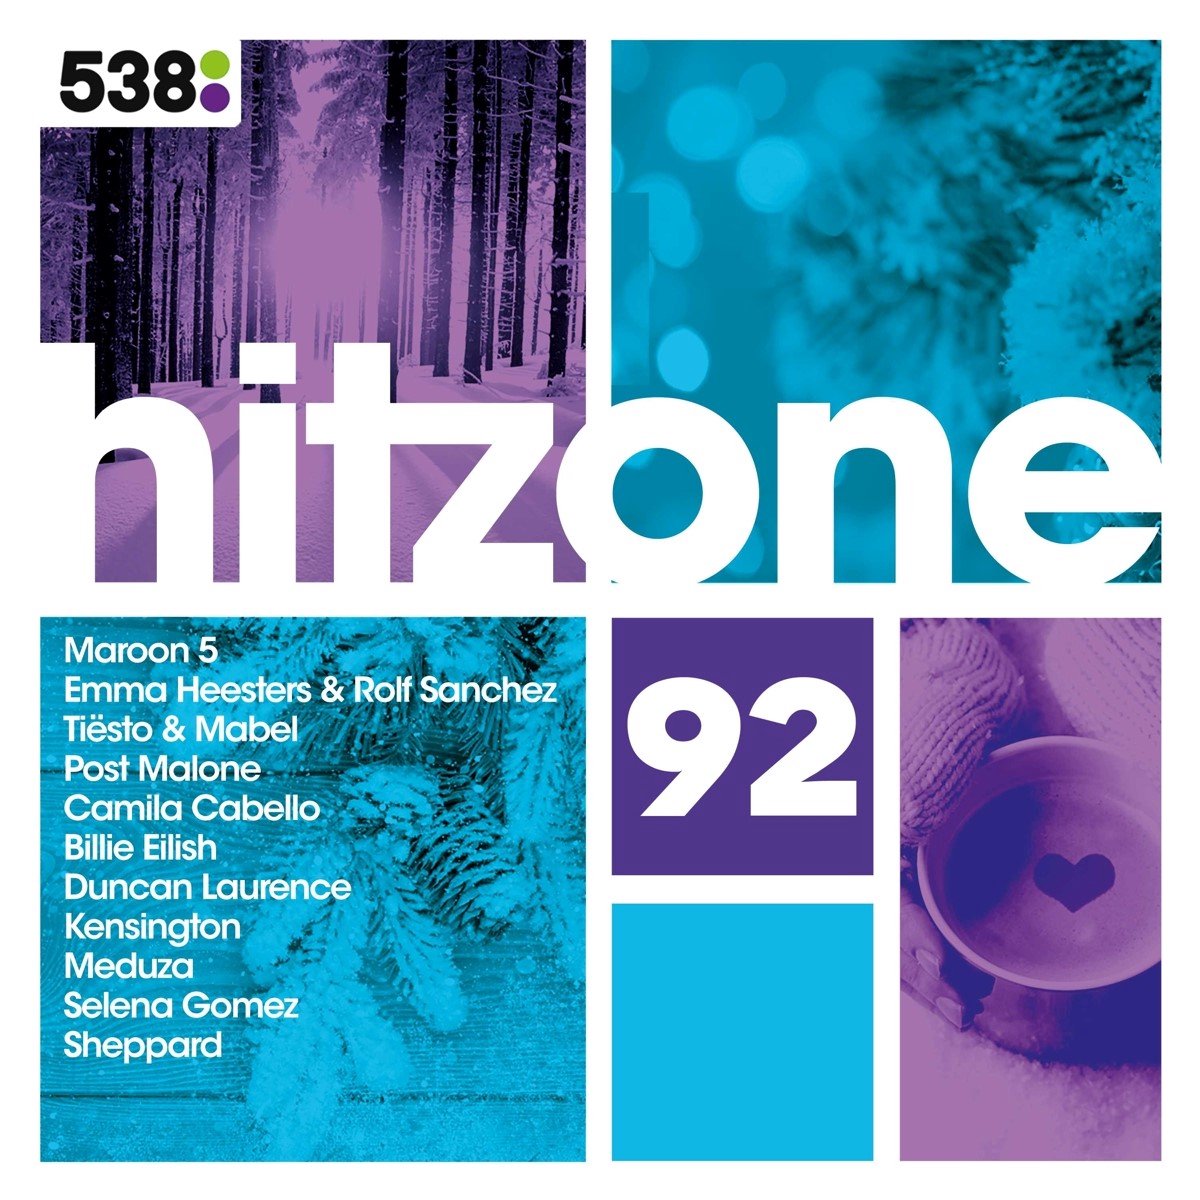 538 Hitzone 92 - various artists